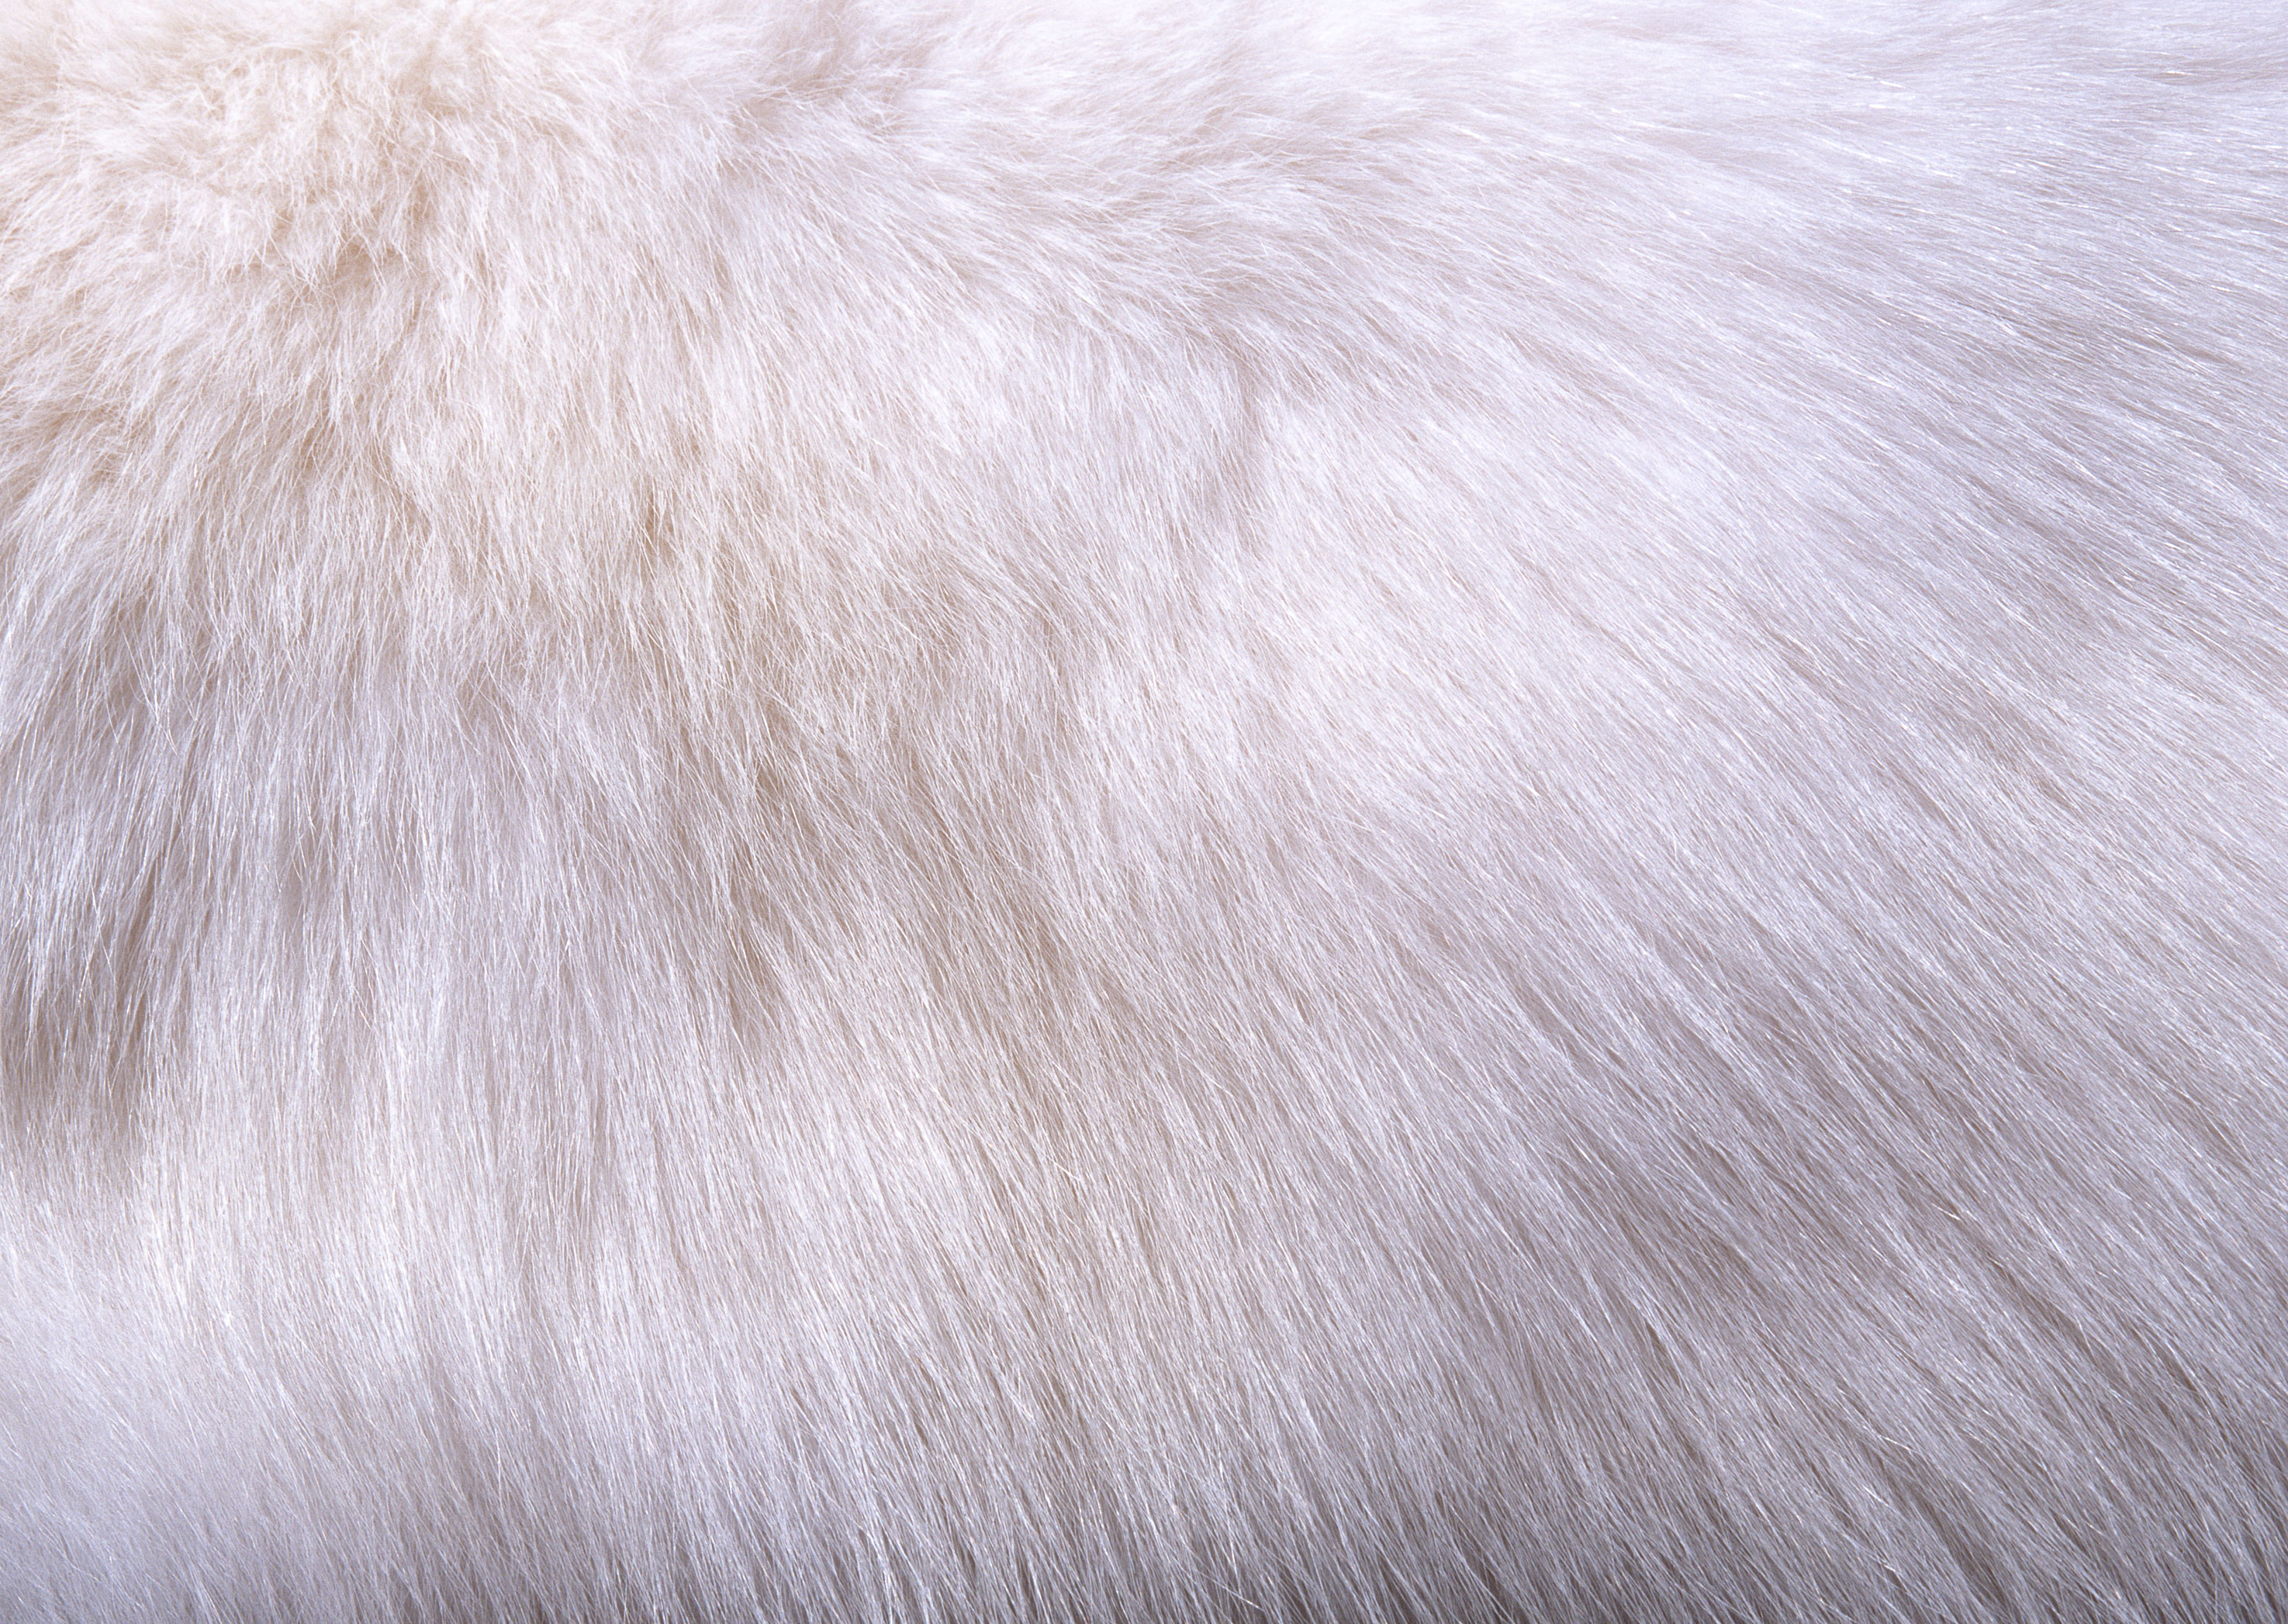 Texture White Fur Background Image